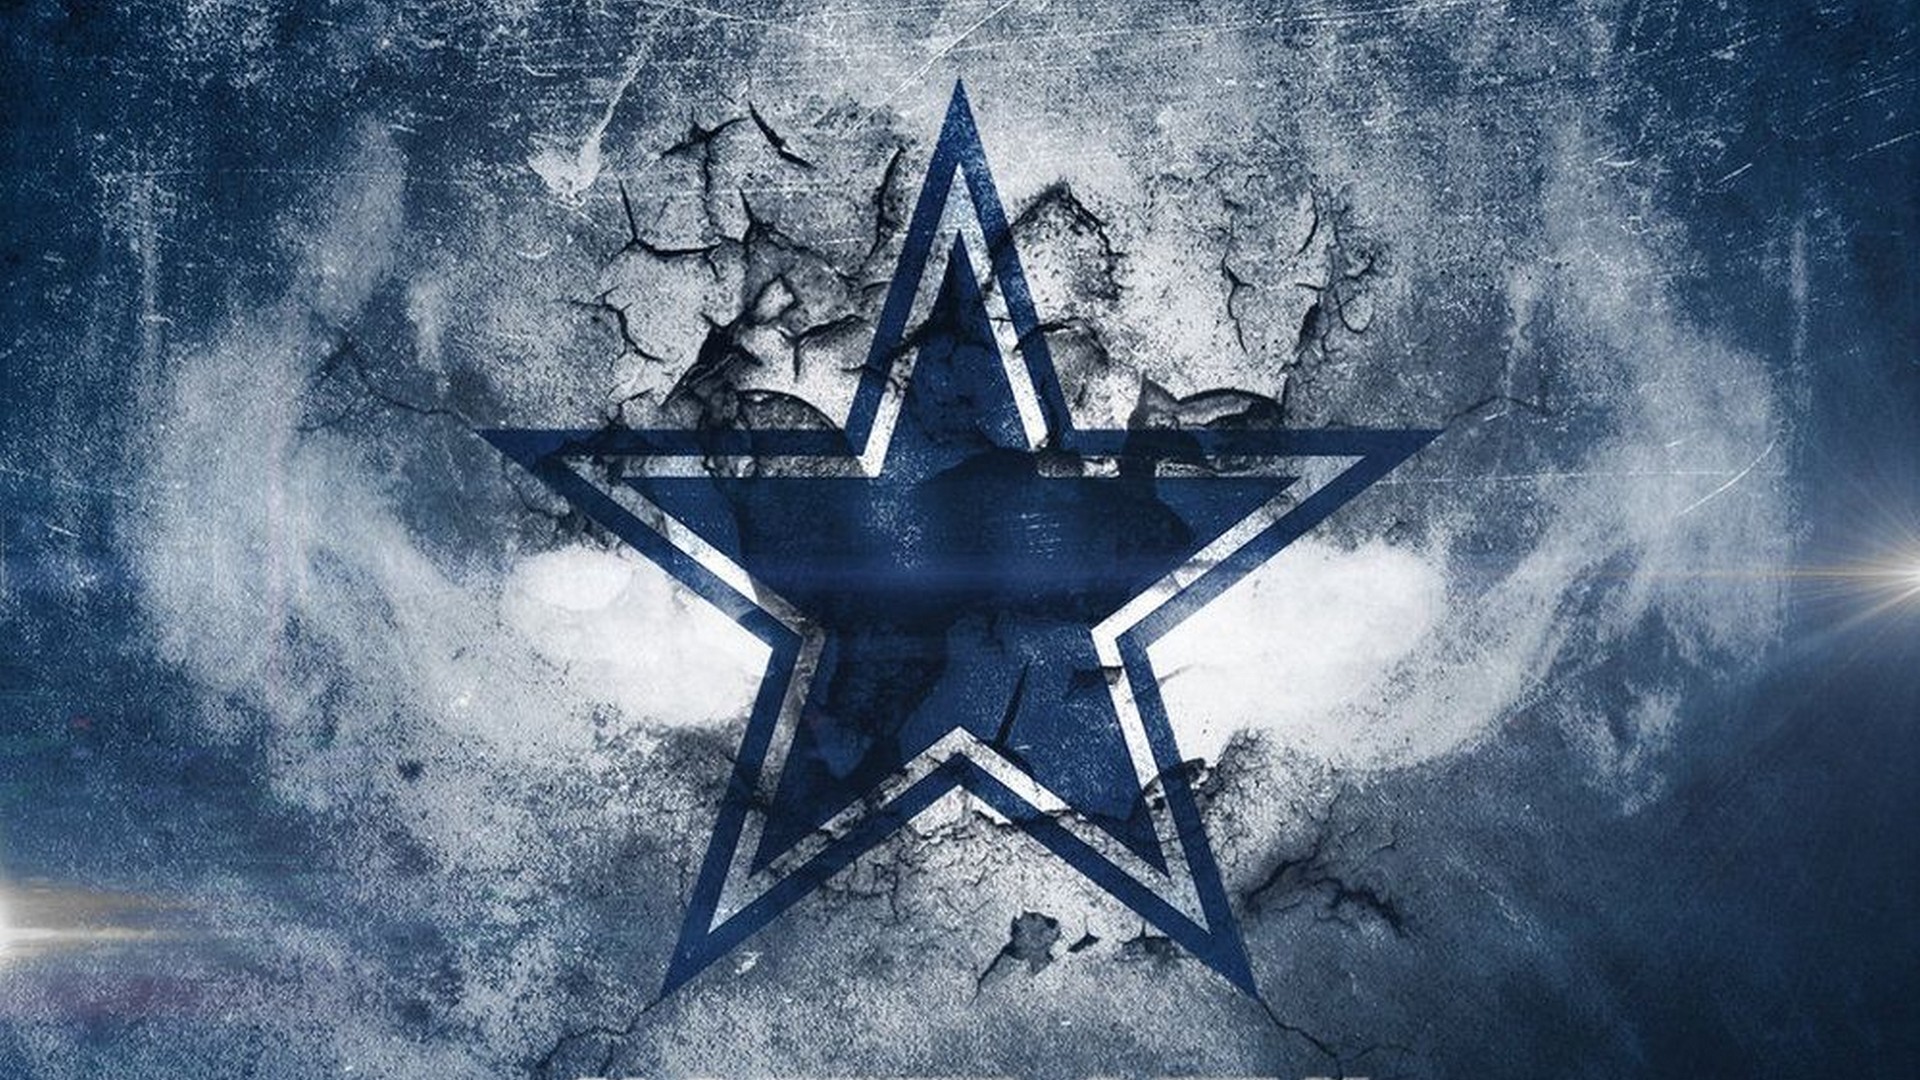 HD Backgrounds Dallas Cowboys | 2020